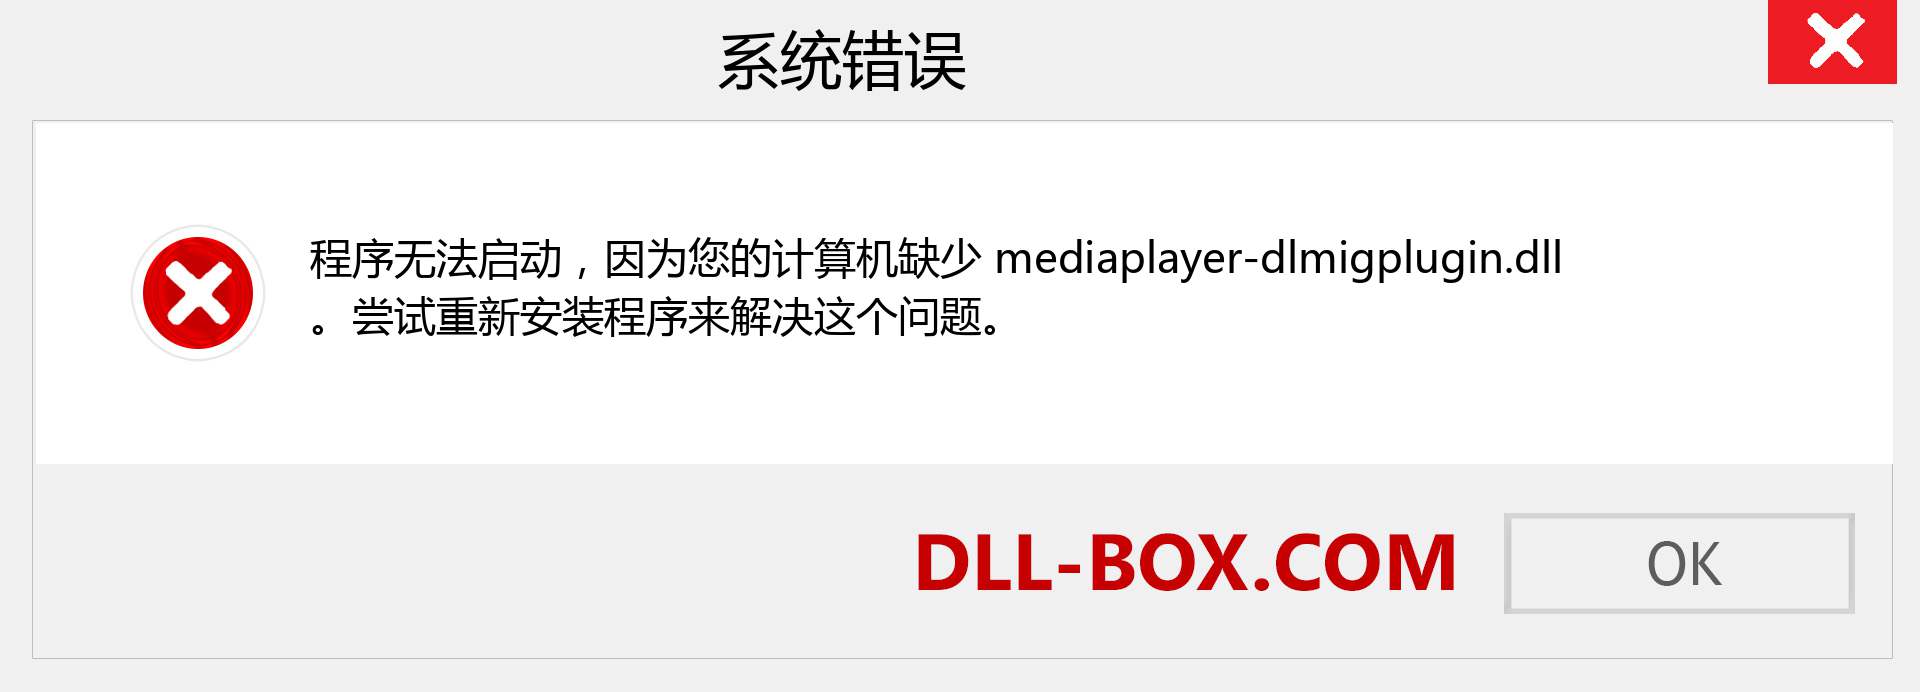 mediaplayer-dlmigplugin.dll 文件丢失？。 适用于 Windows 7、8、10 的下载 - 修复 Windows、照片、图像上的 mediaplayer-dlmigplugin dll 丢失错误